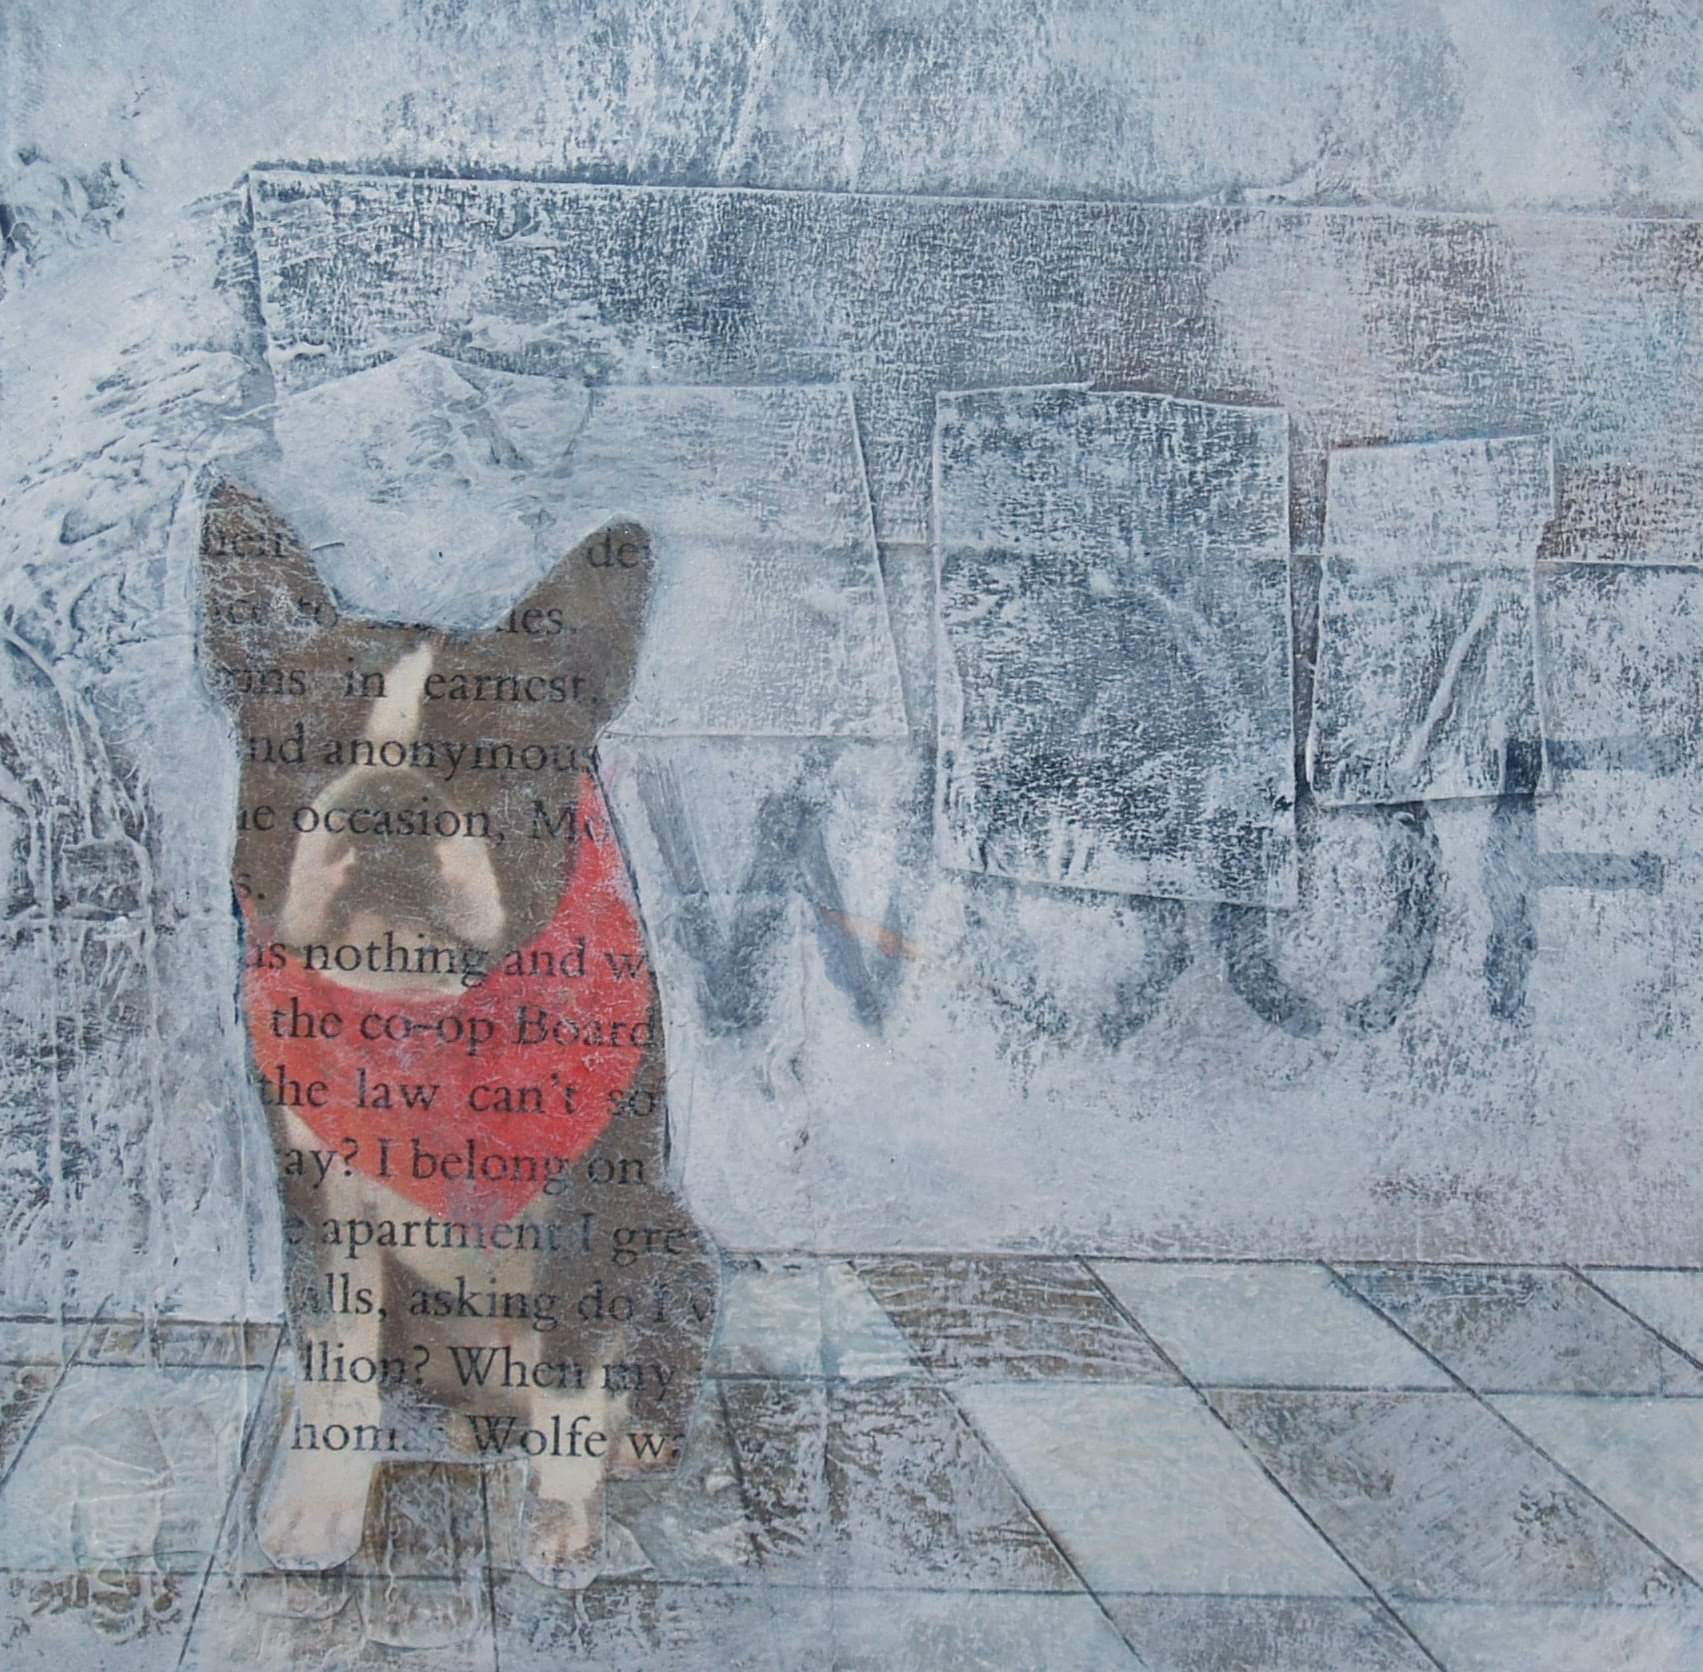 'Woof' by artist Gwen Black